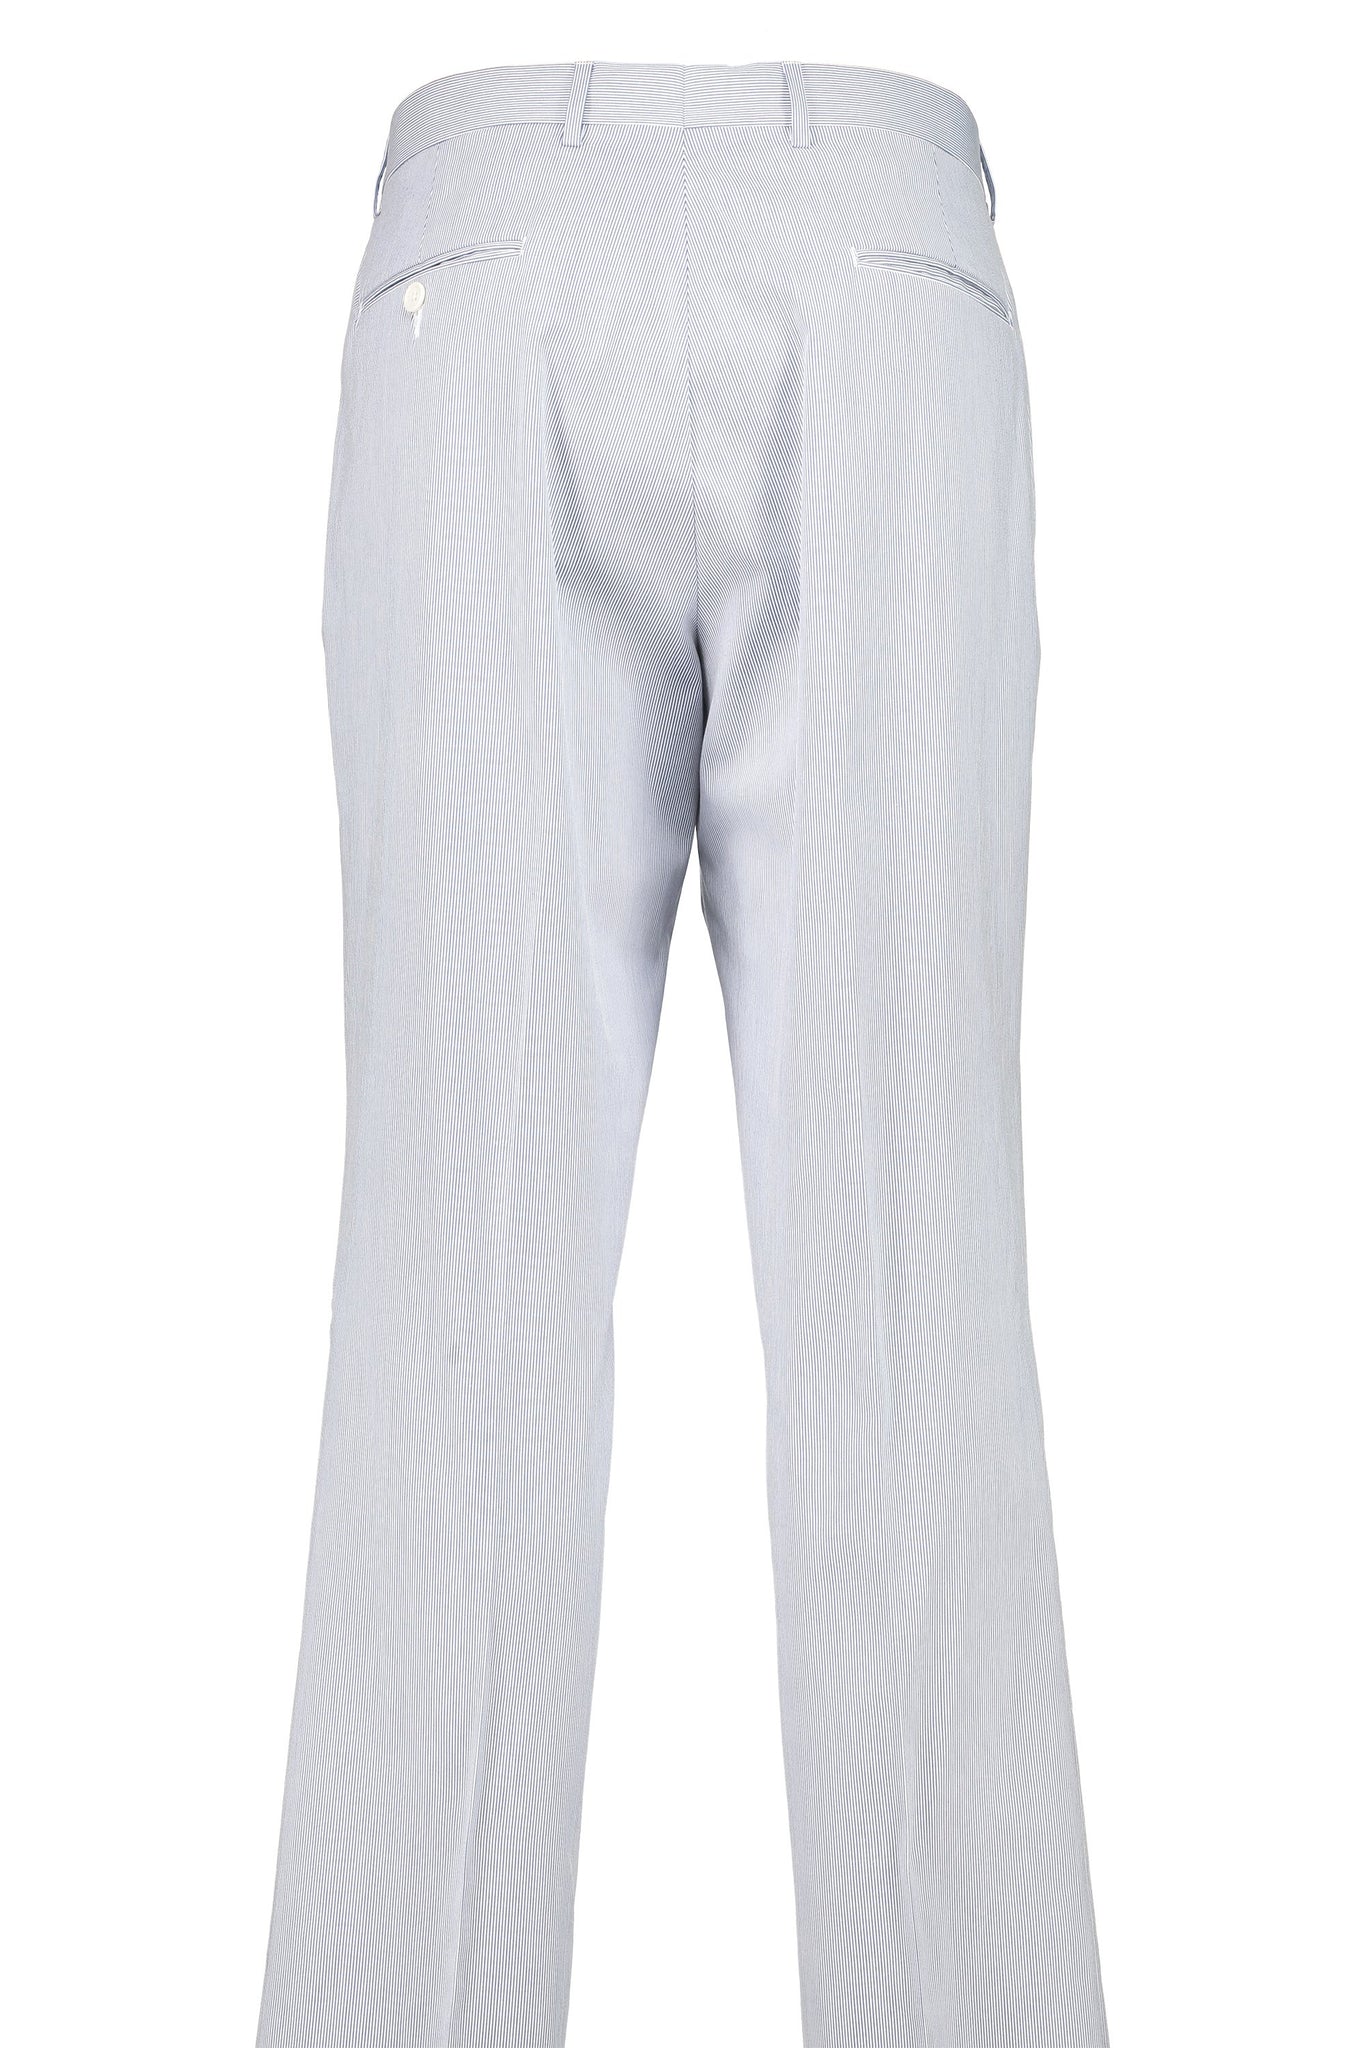 Classic Fit Blue & White Pincord Cotton Suit Separate Flat Front Pants -  Hardwick.com